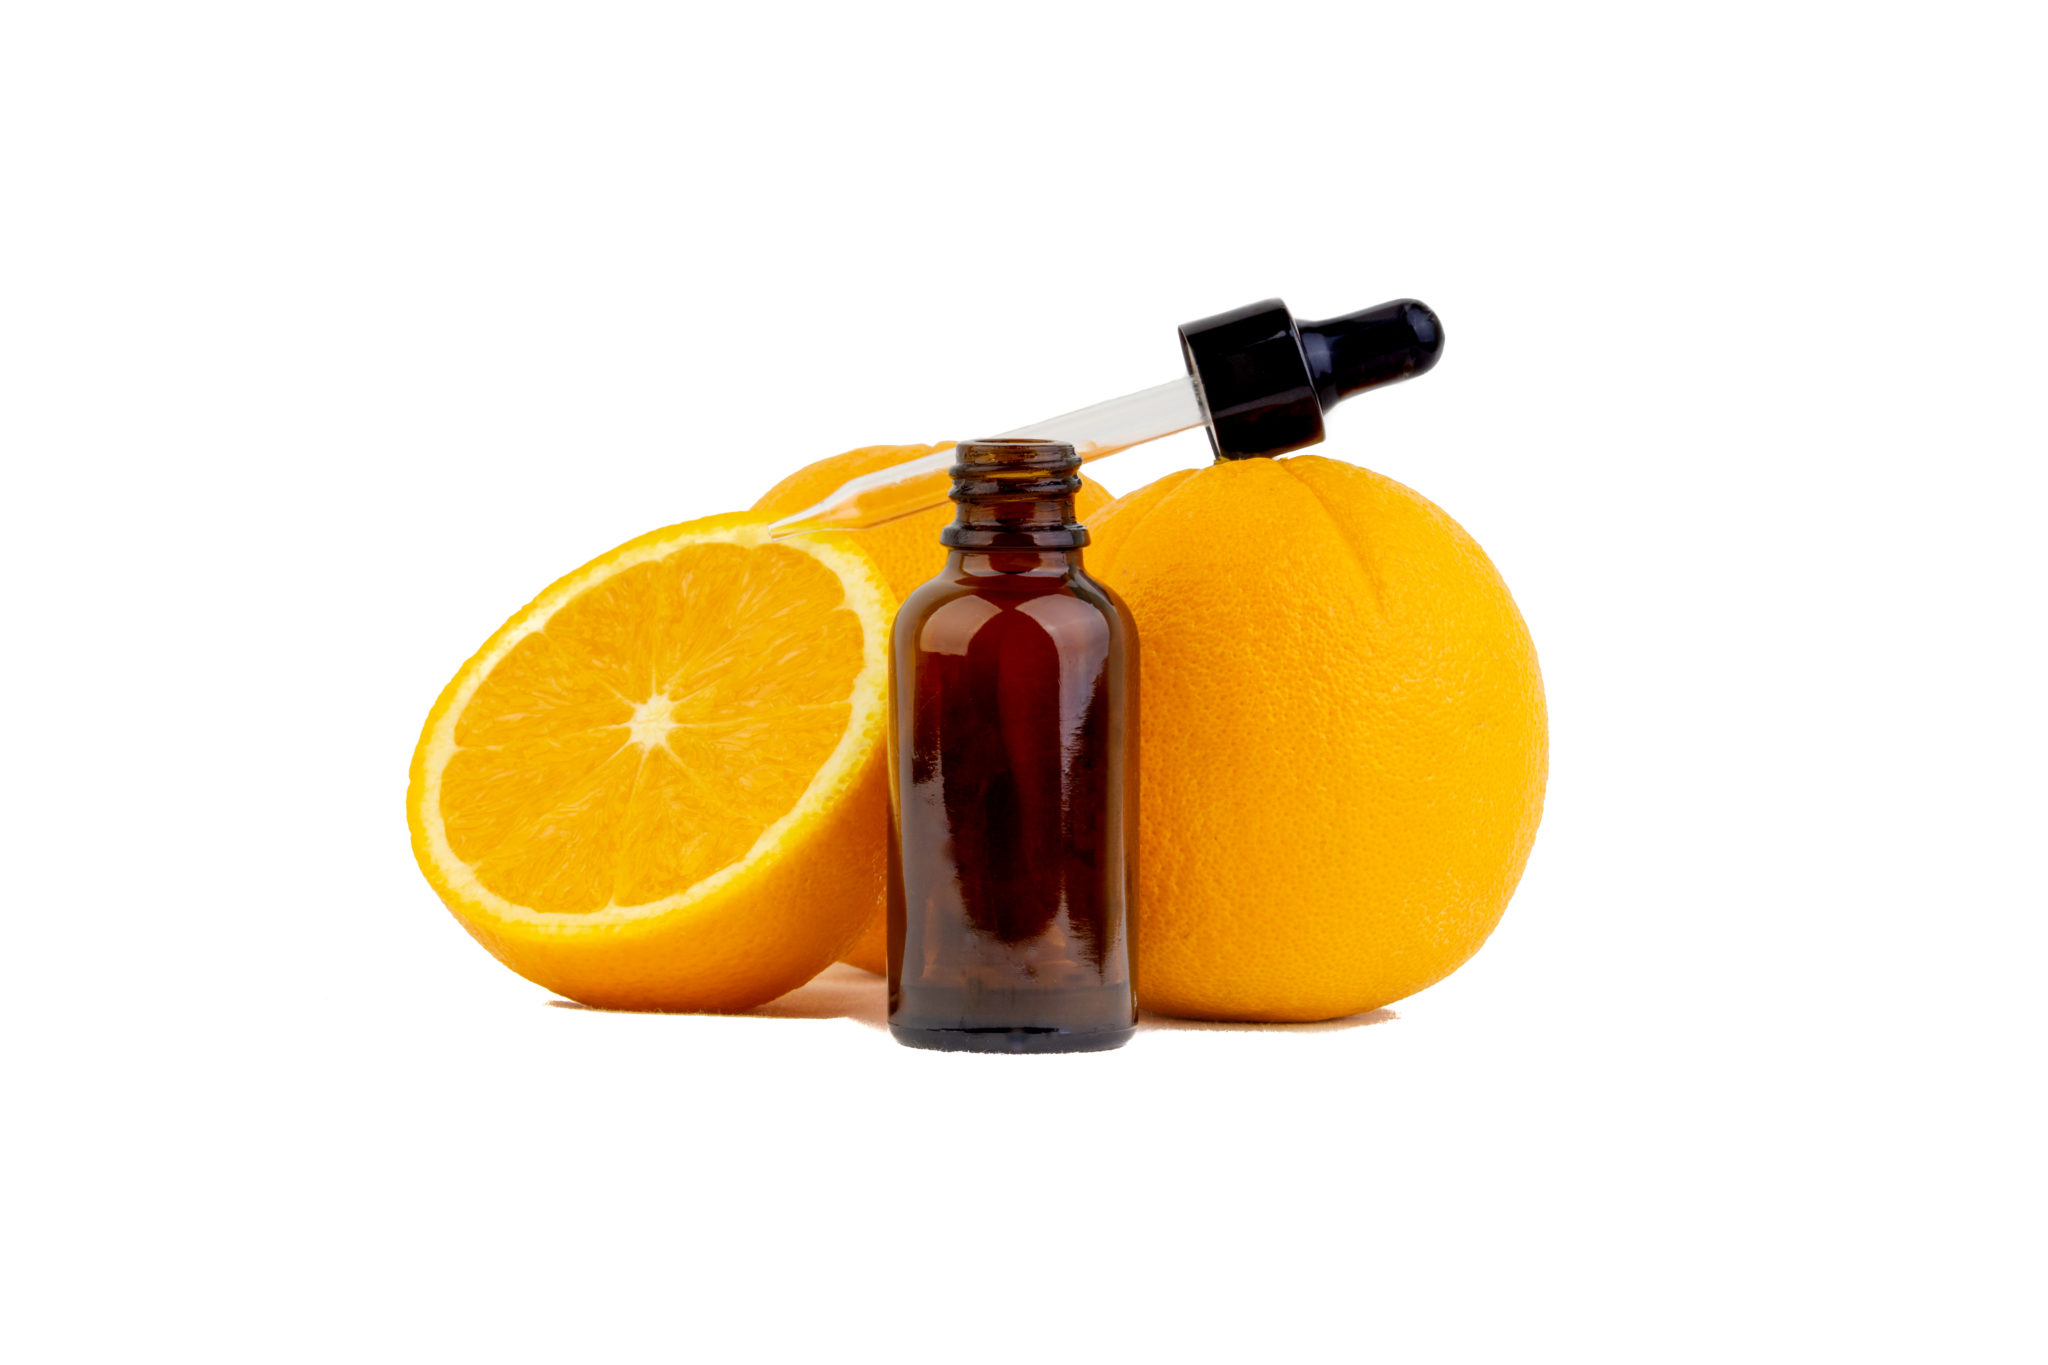 Vitamin C serum bottle with dropper and orange